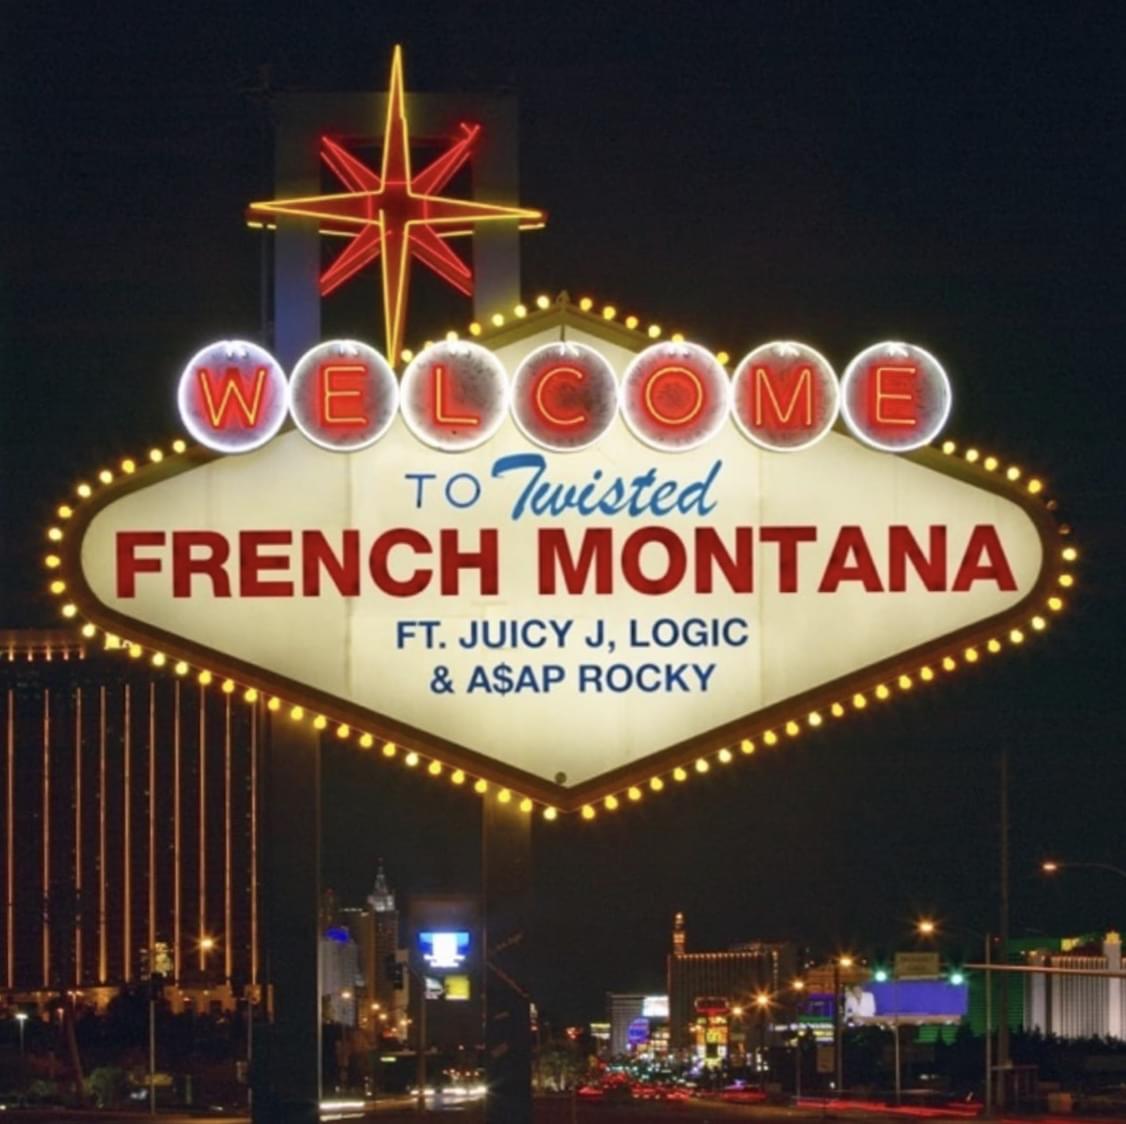 French Montana Releases New Single “Twisted” w/ Juicy J, A$AP Rocky, & Logic [LISTEN]